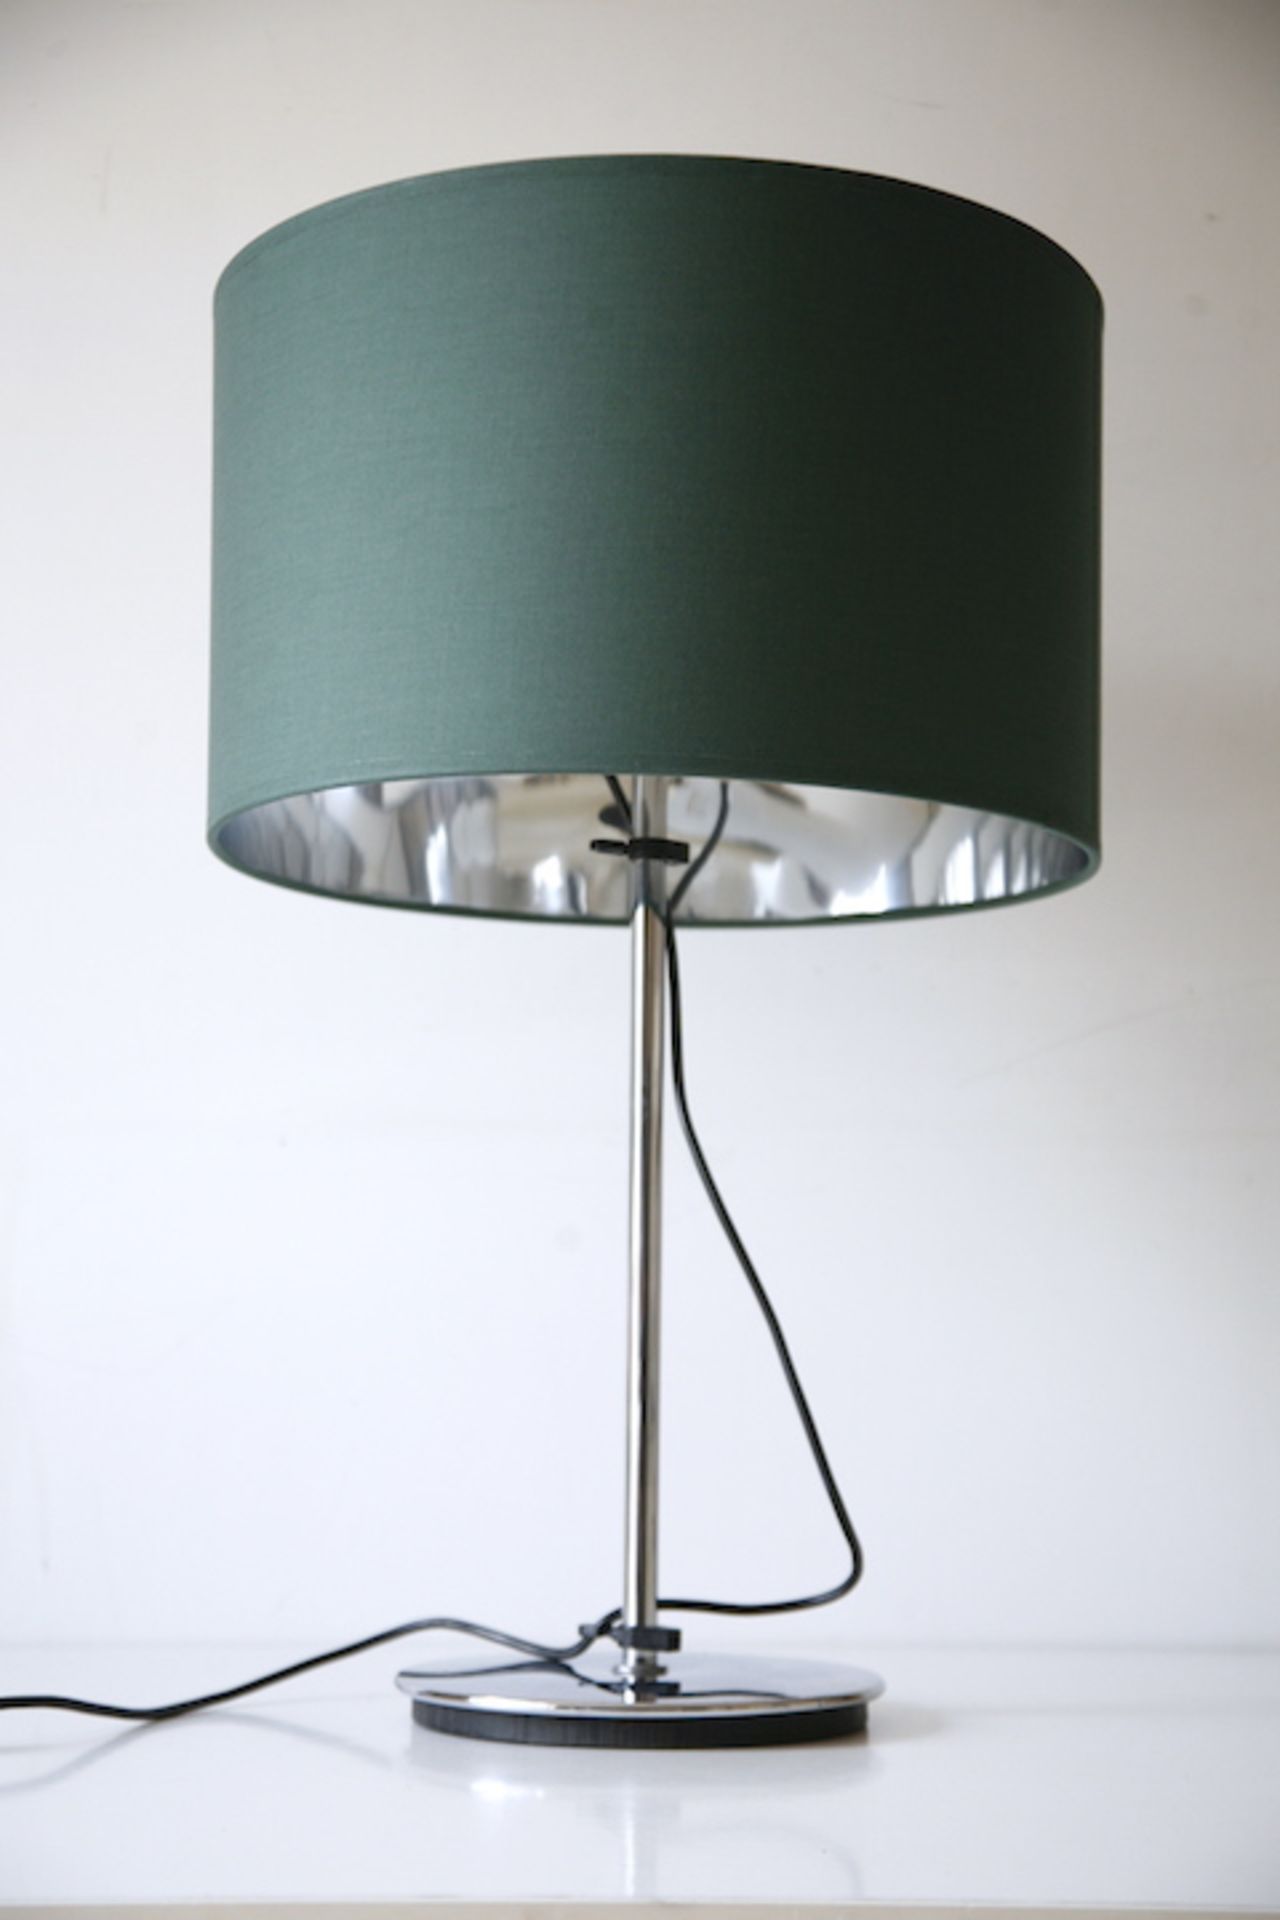 VINTAGE 20TH CENTURY GERMAN DESK / TABLE LAMP